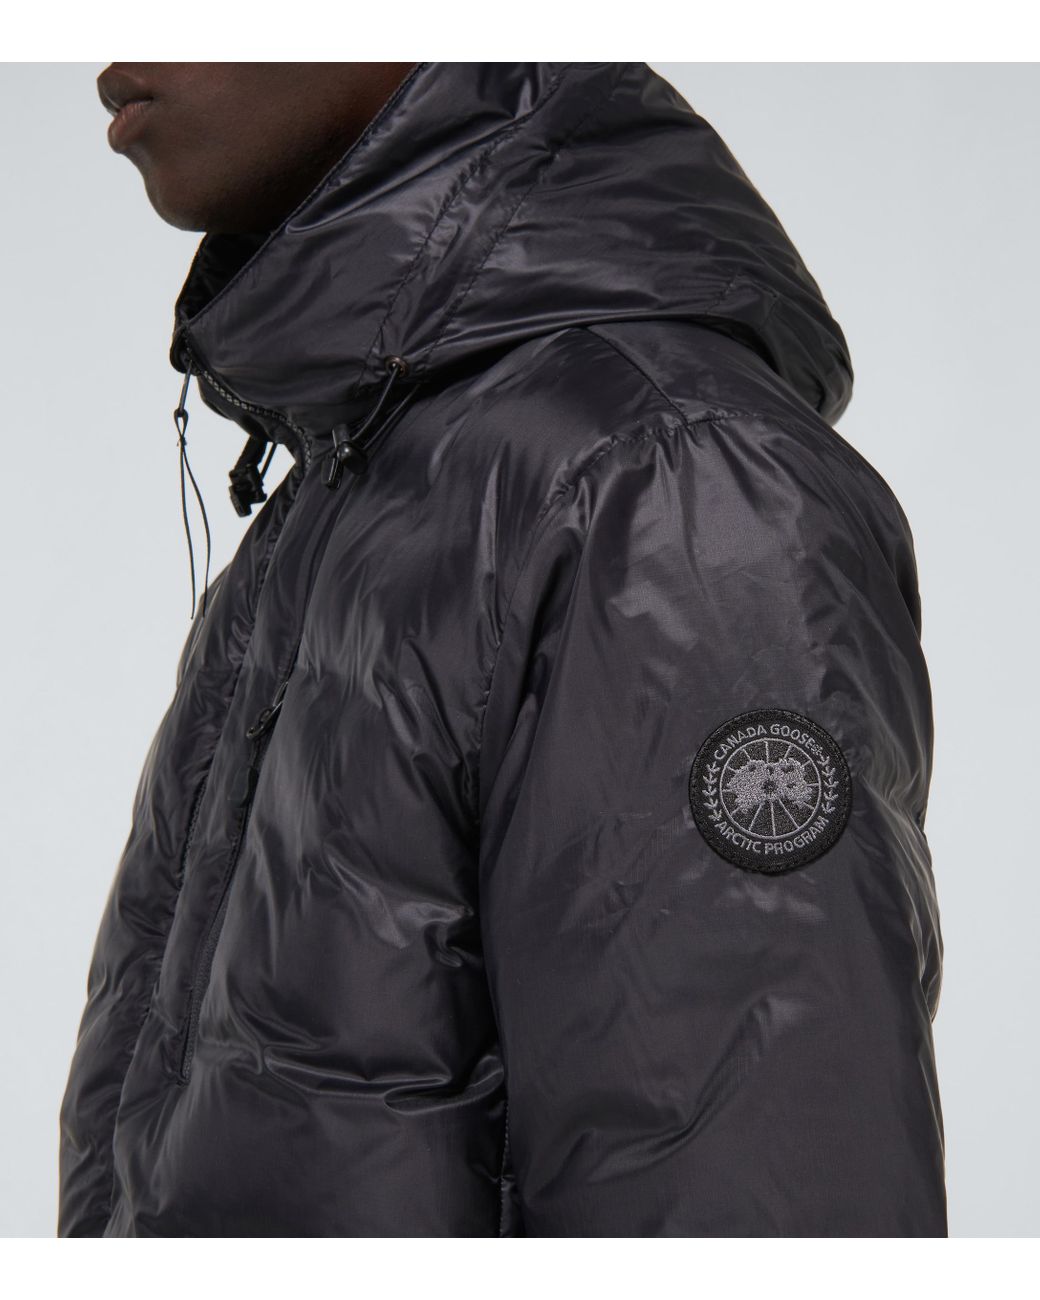 Canada Goose Black Label Lodge Hoody Jacket for Men | Lyst